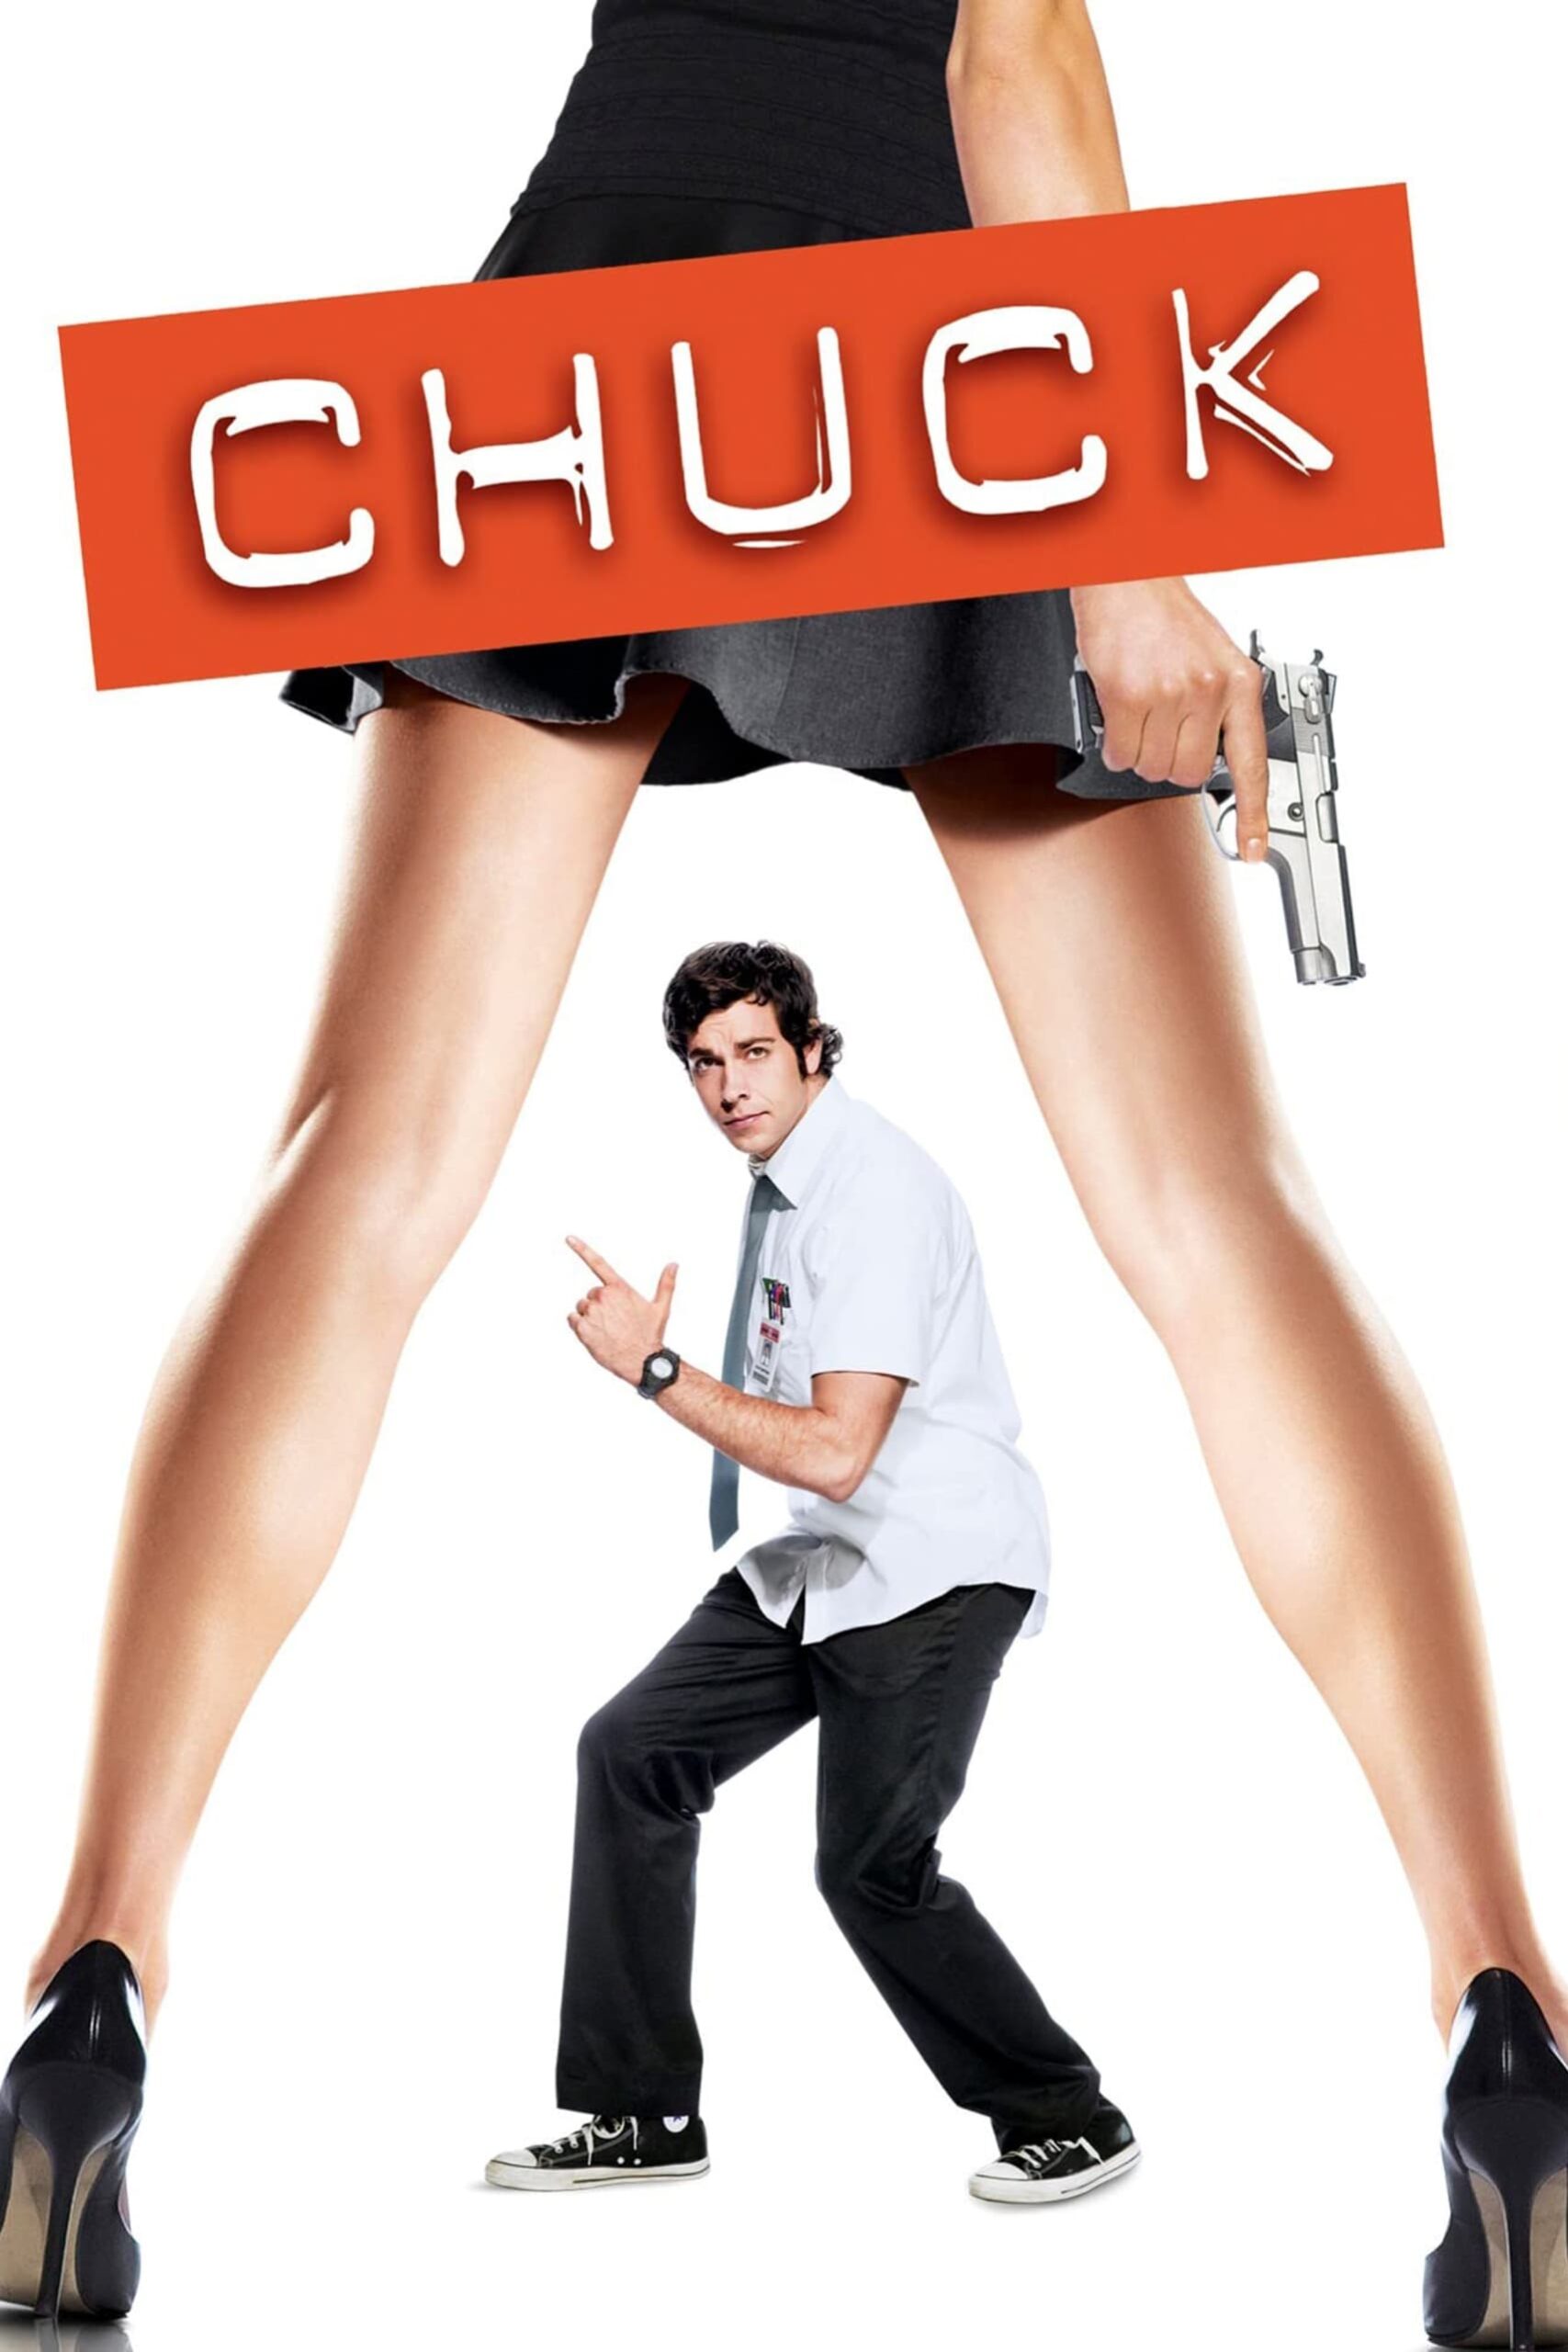 Plakát pro film “Chuck”